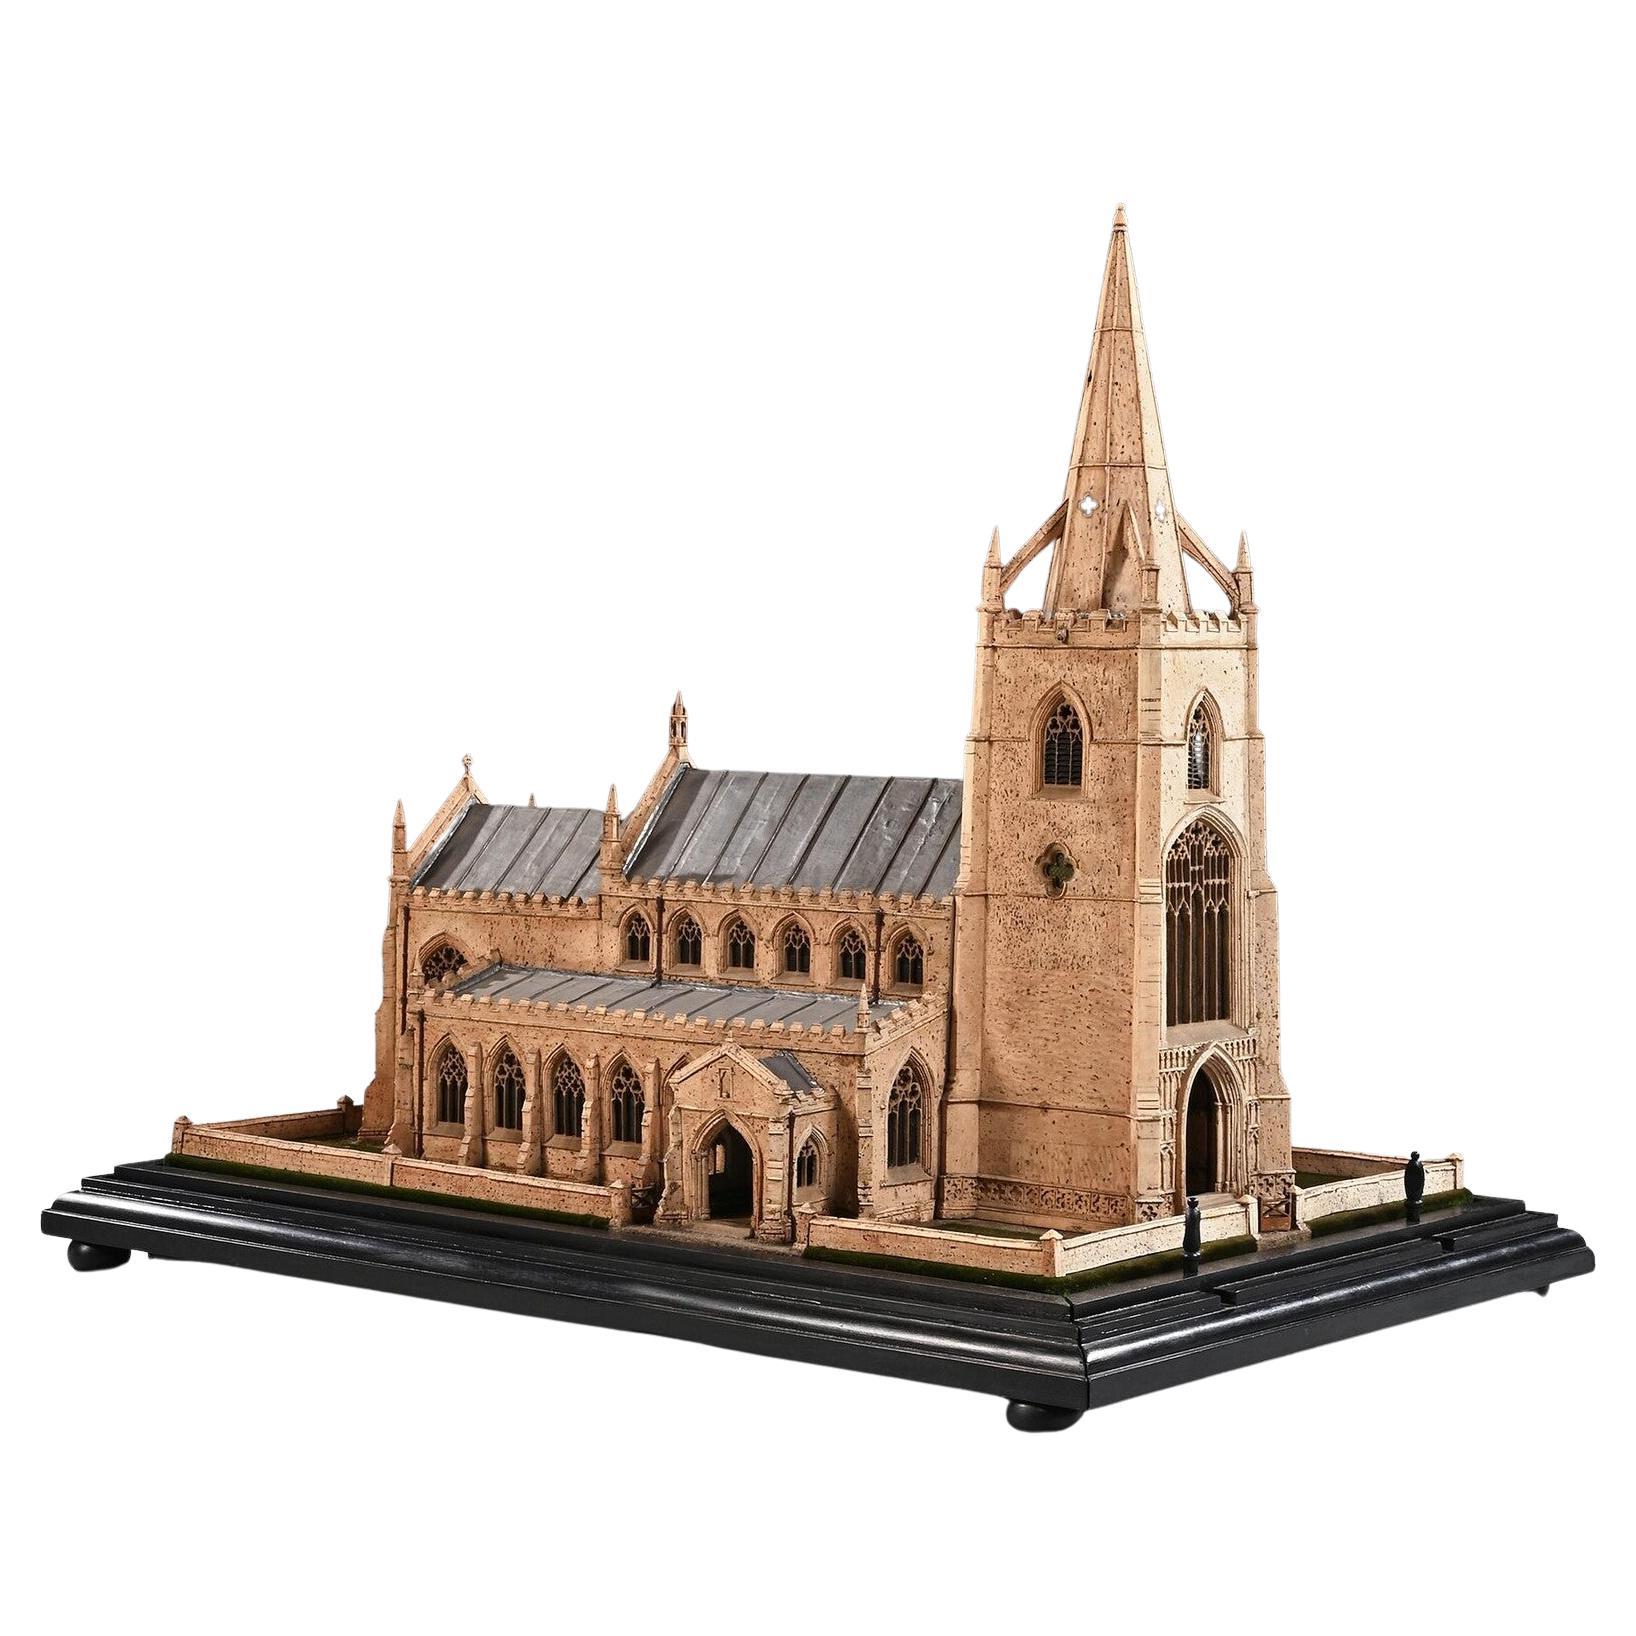 Architectural Cork Model of an English Church by Cornelius Daniel Ward For Sale